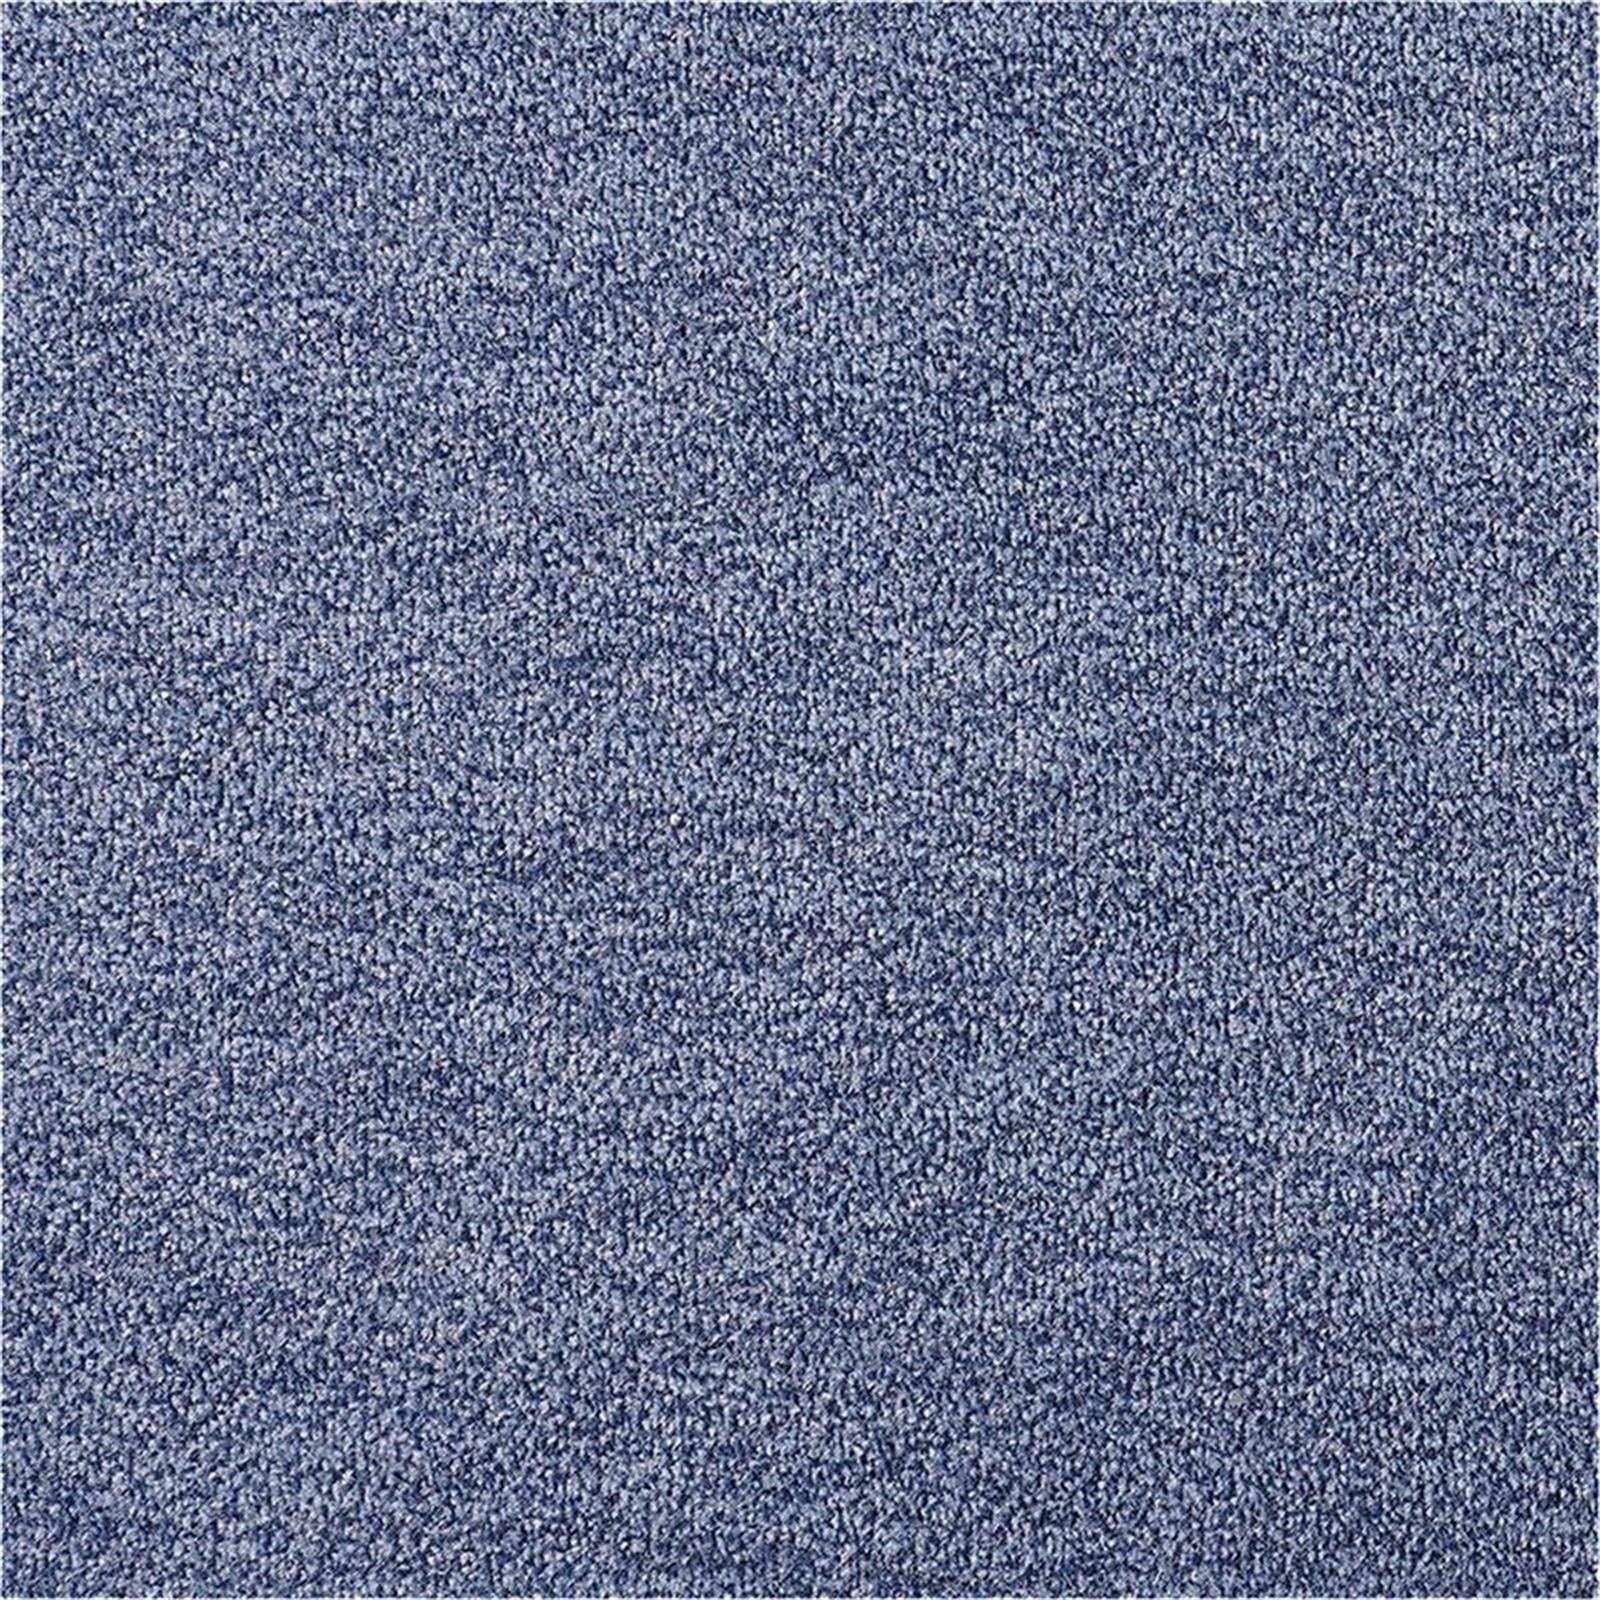 Teppichboden Infloor-Girloon Charme Velours Blau 340 meliert - Rollenbreite 400 cm